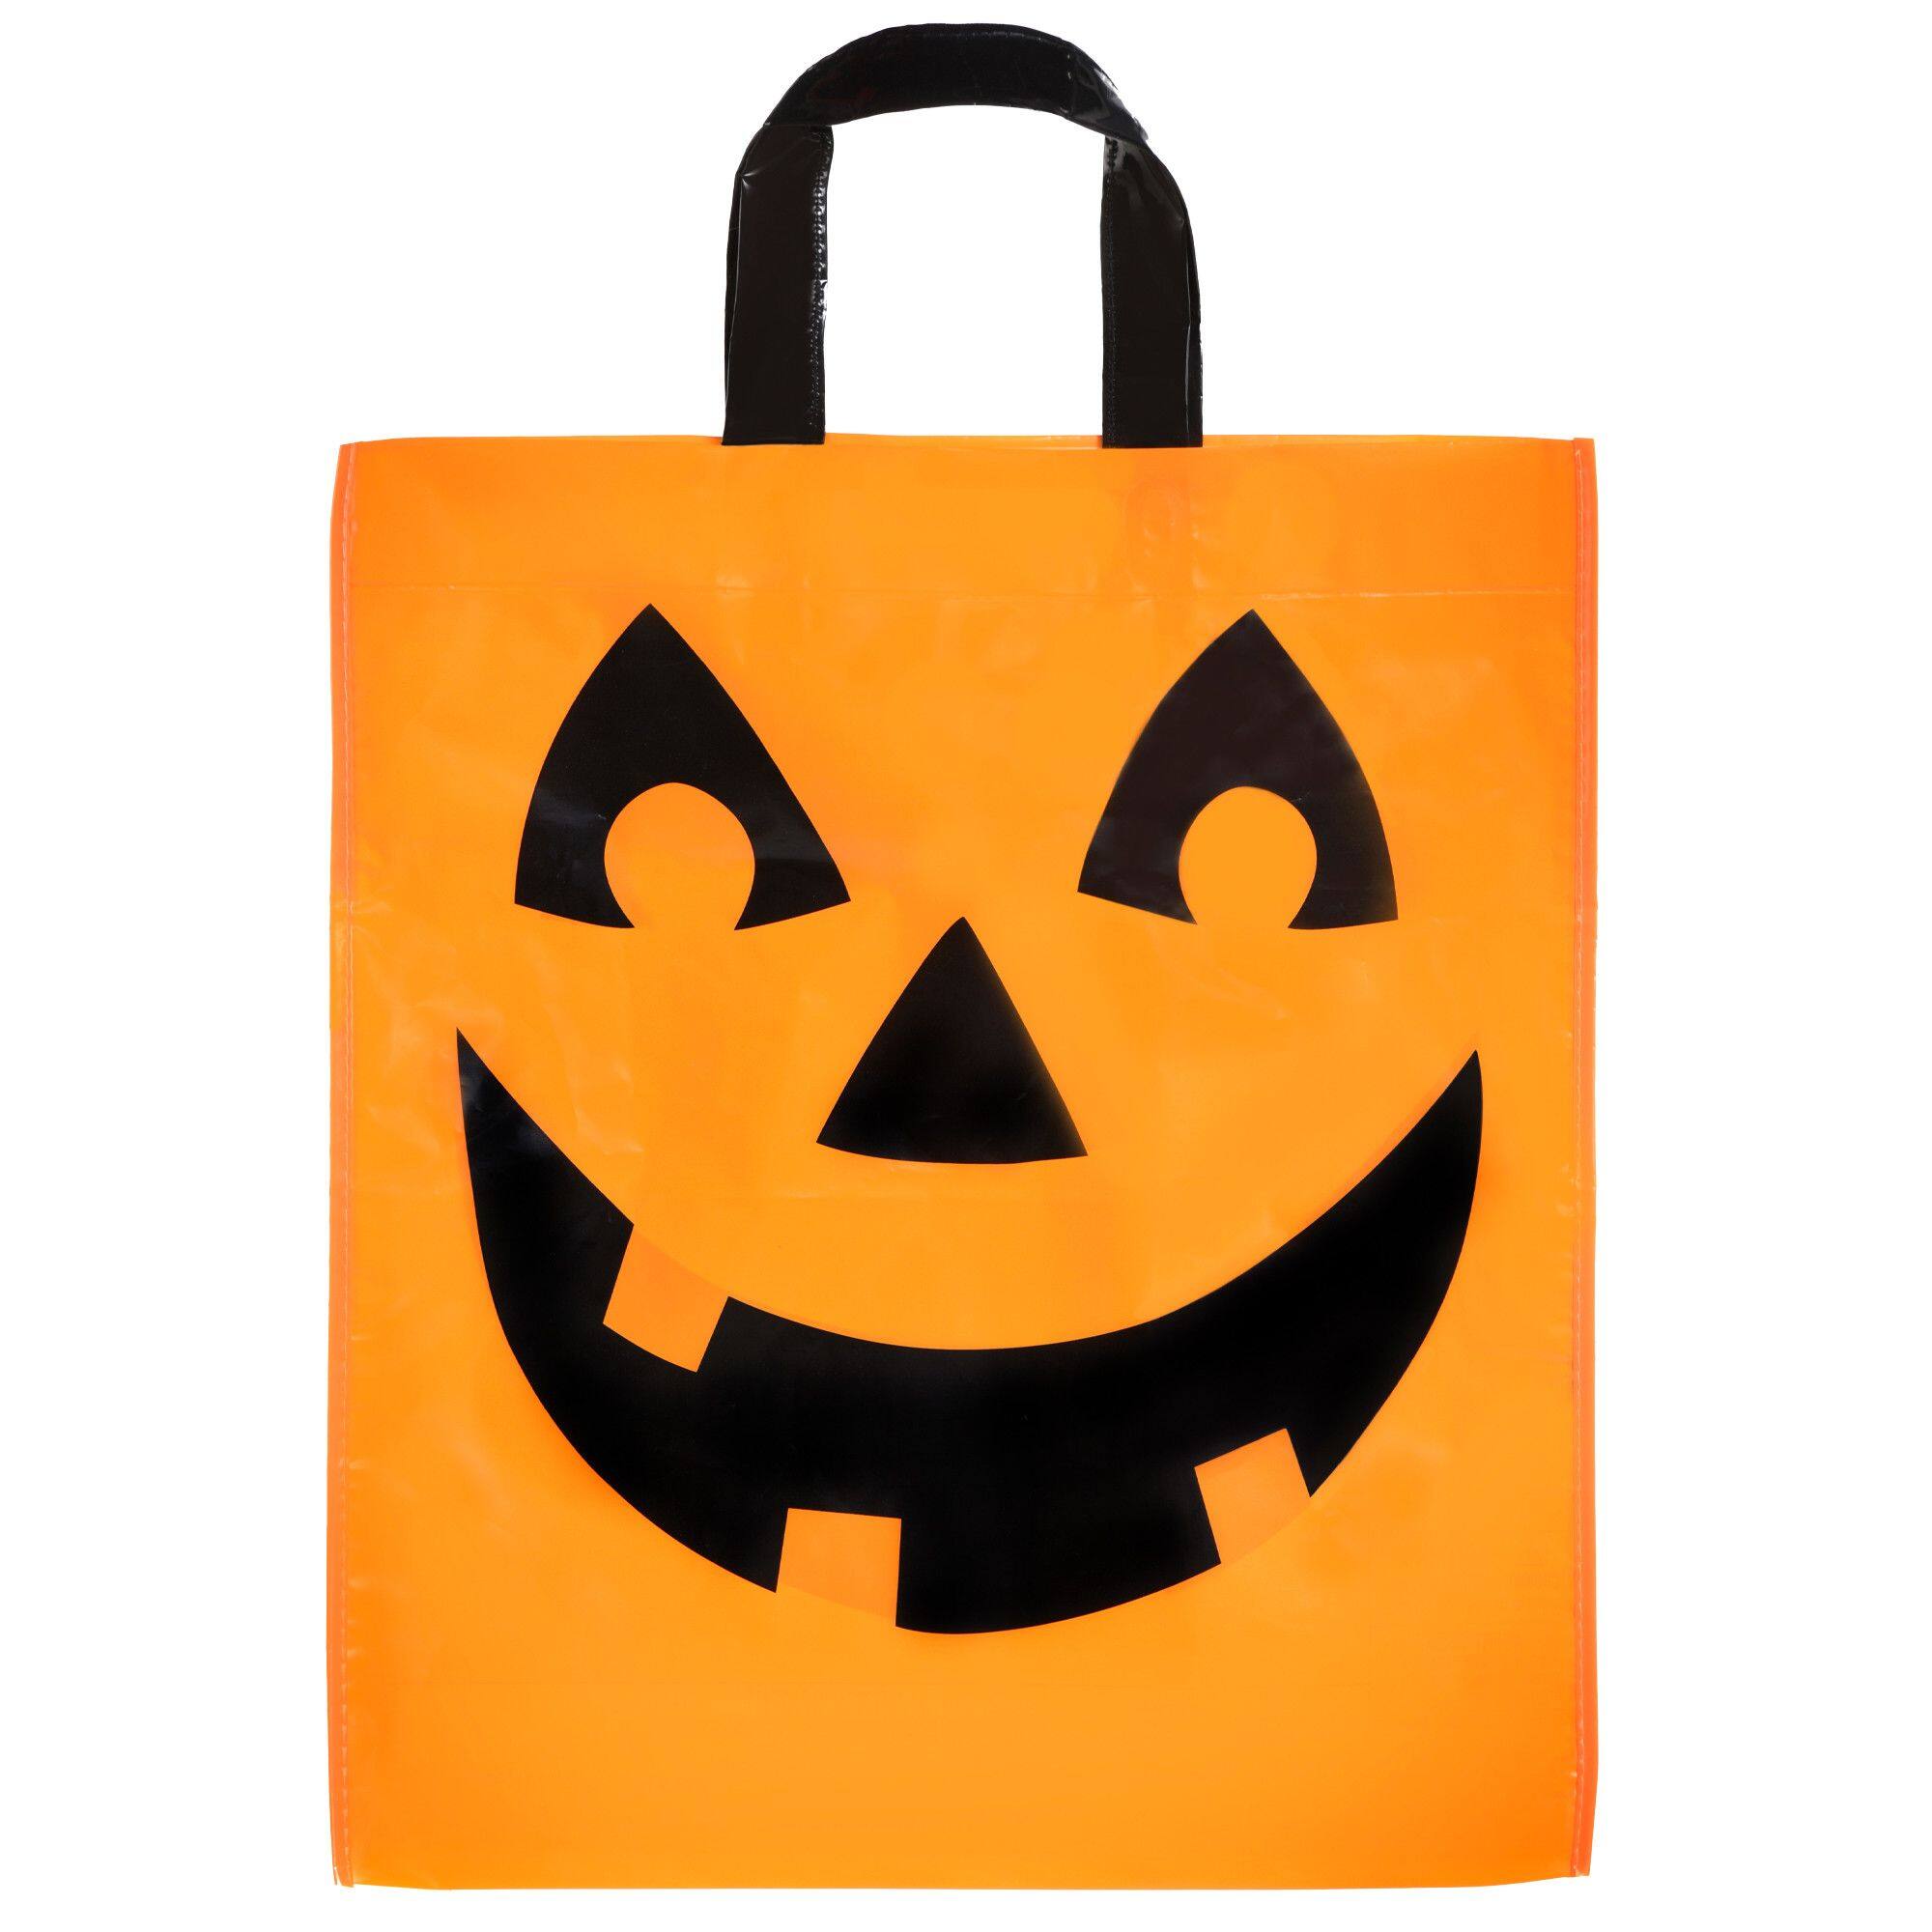 Sid the Science Kid Happy Halloween Black Trick-or-Treat Bag